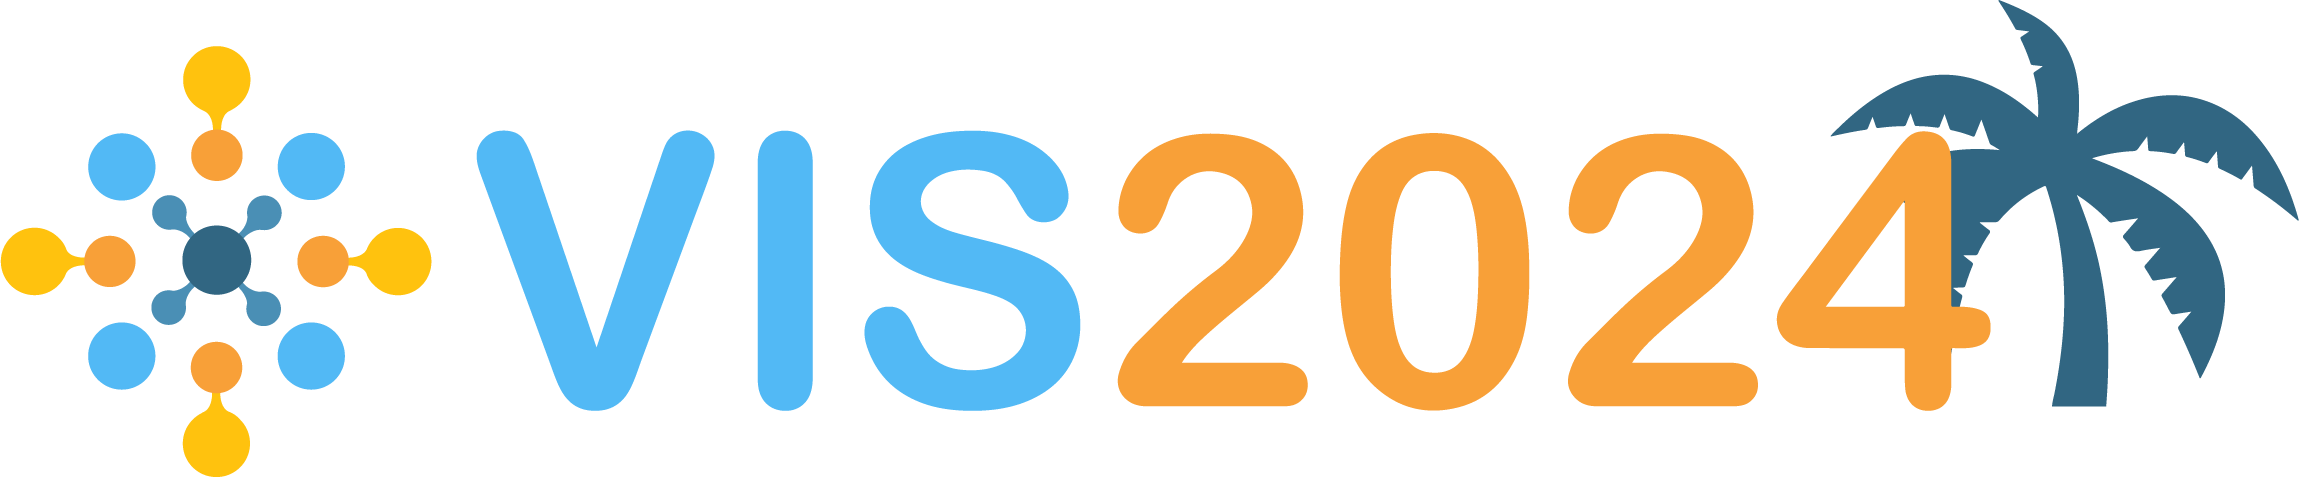 VIS 2024 LogoVIS 2024 Logo